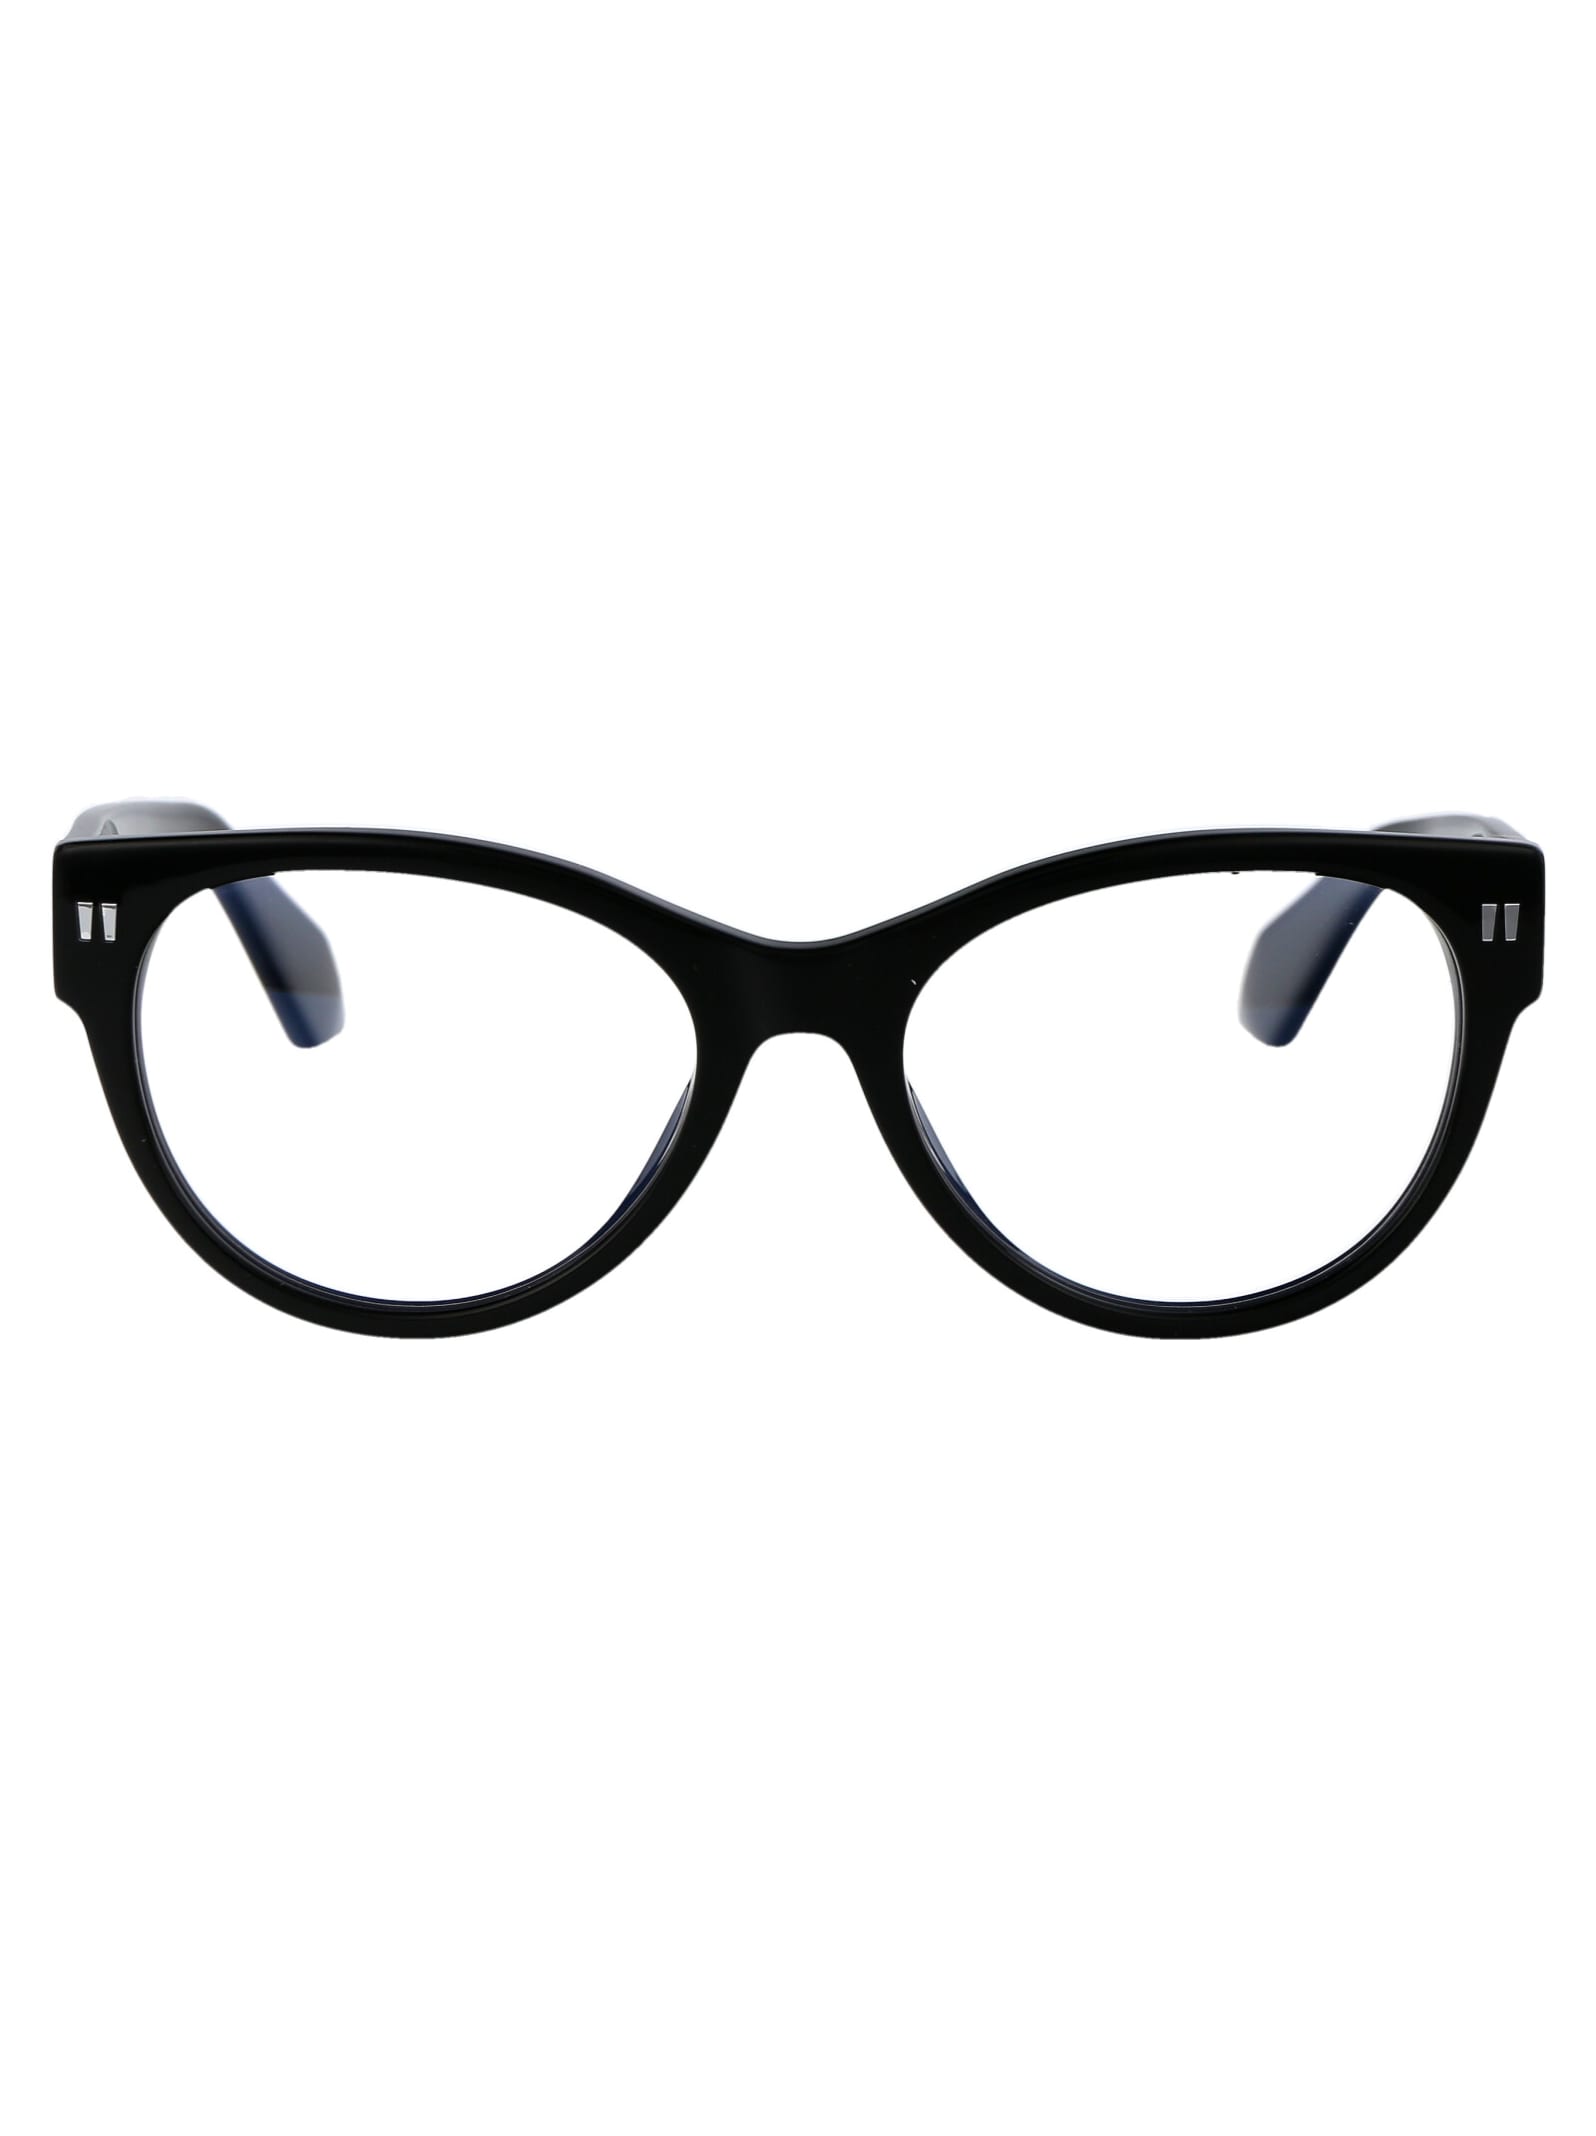 Optical Style 57 Glasses